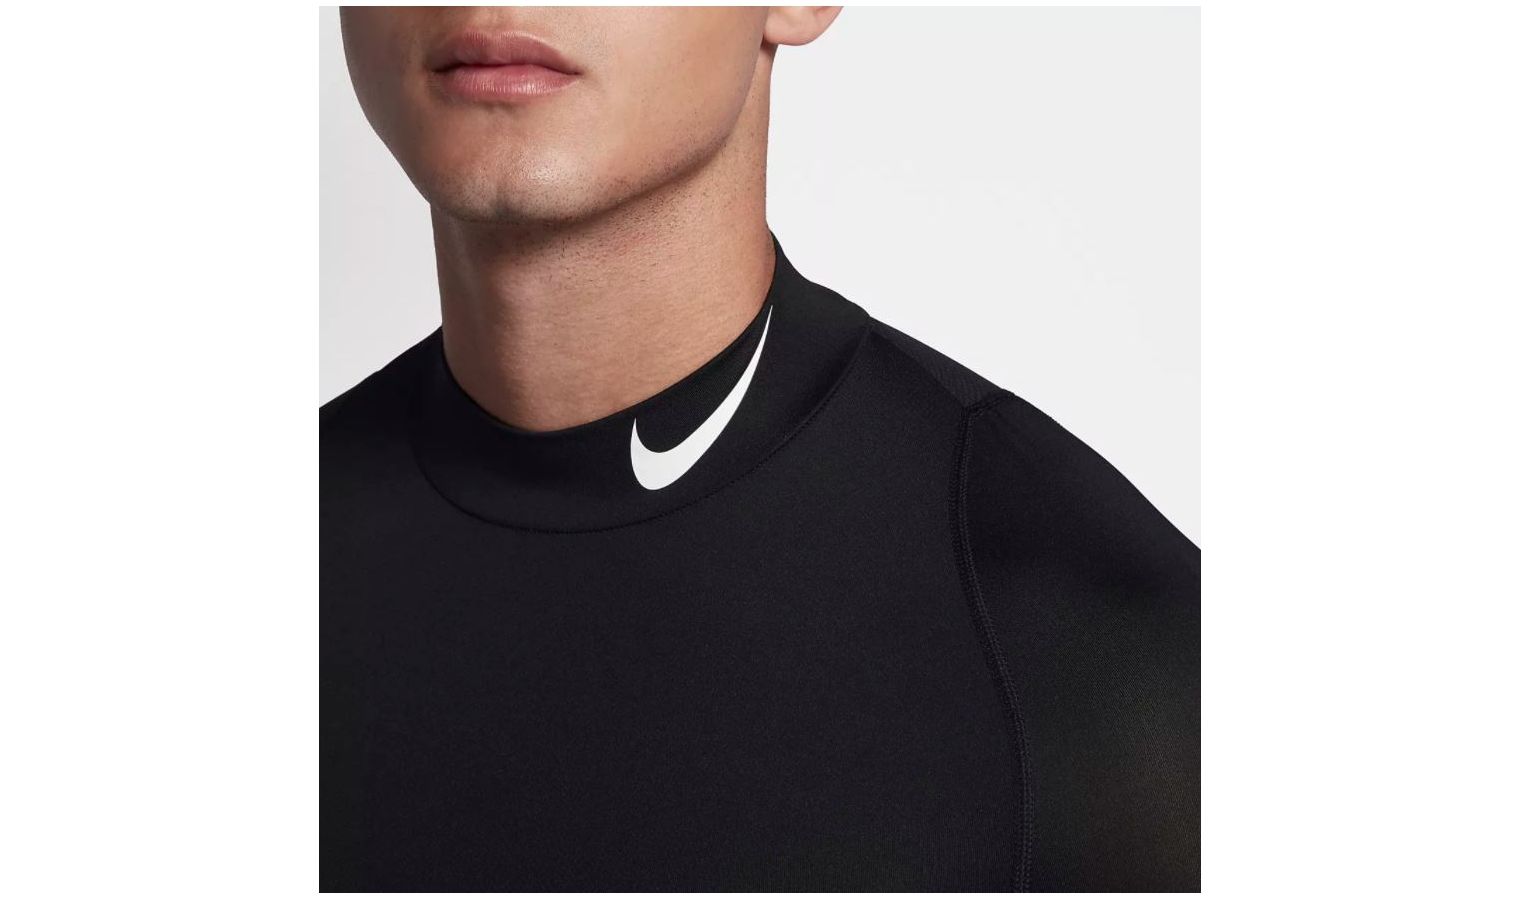 Mens compression long sleeve shirt Nike M NP TOP LS COMP black | AD Sport.store